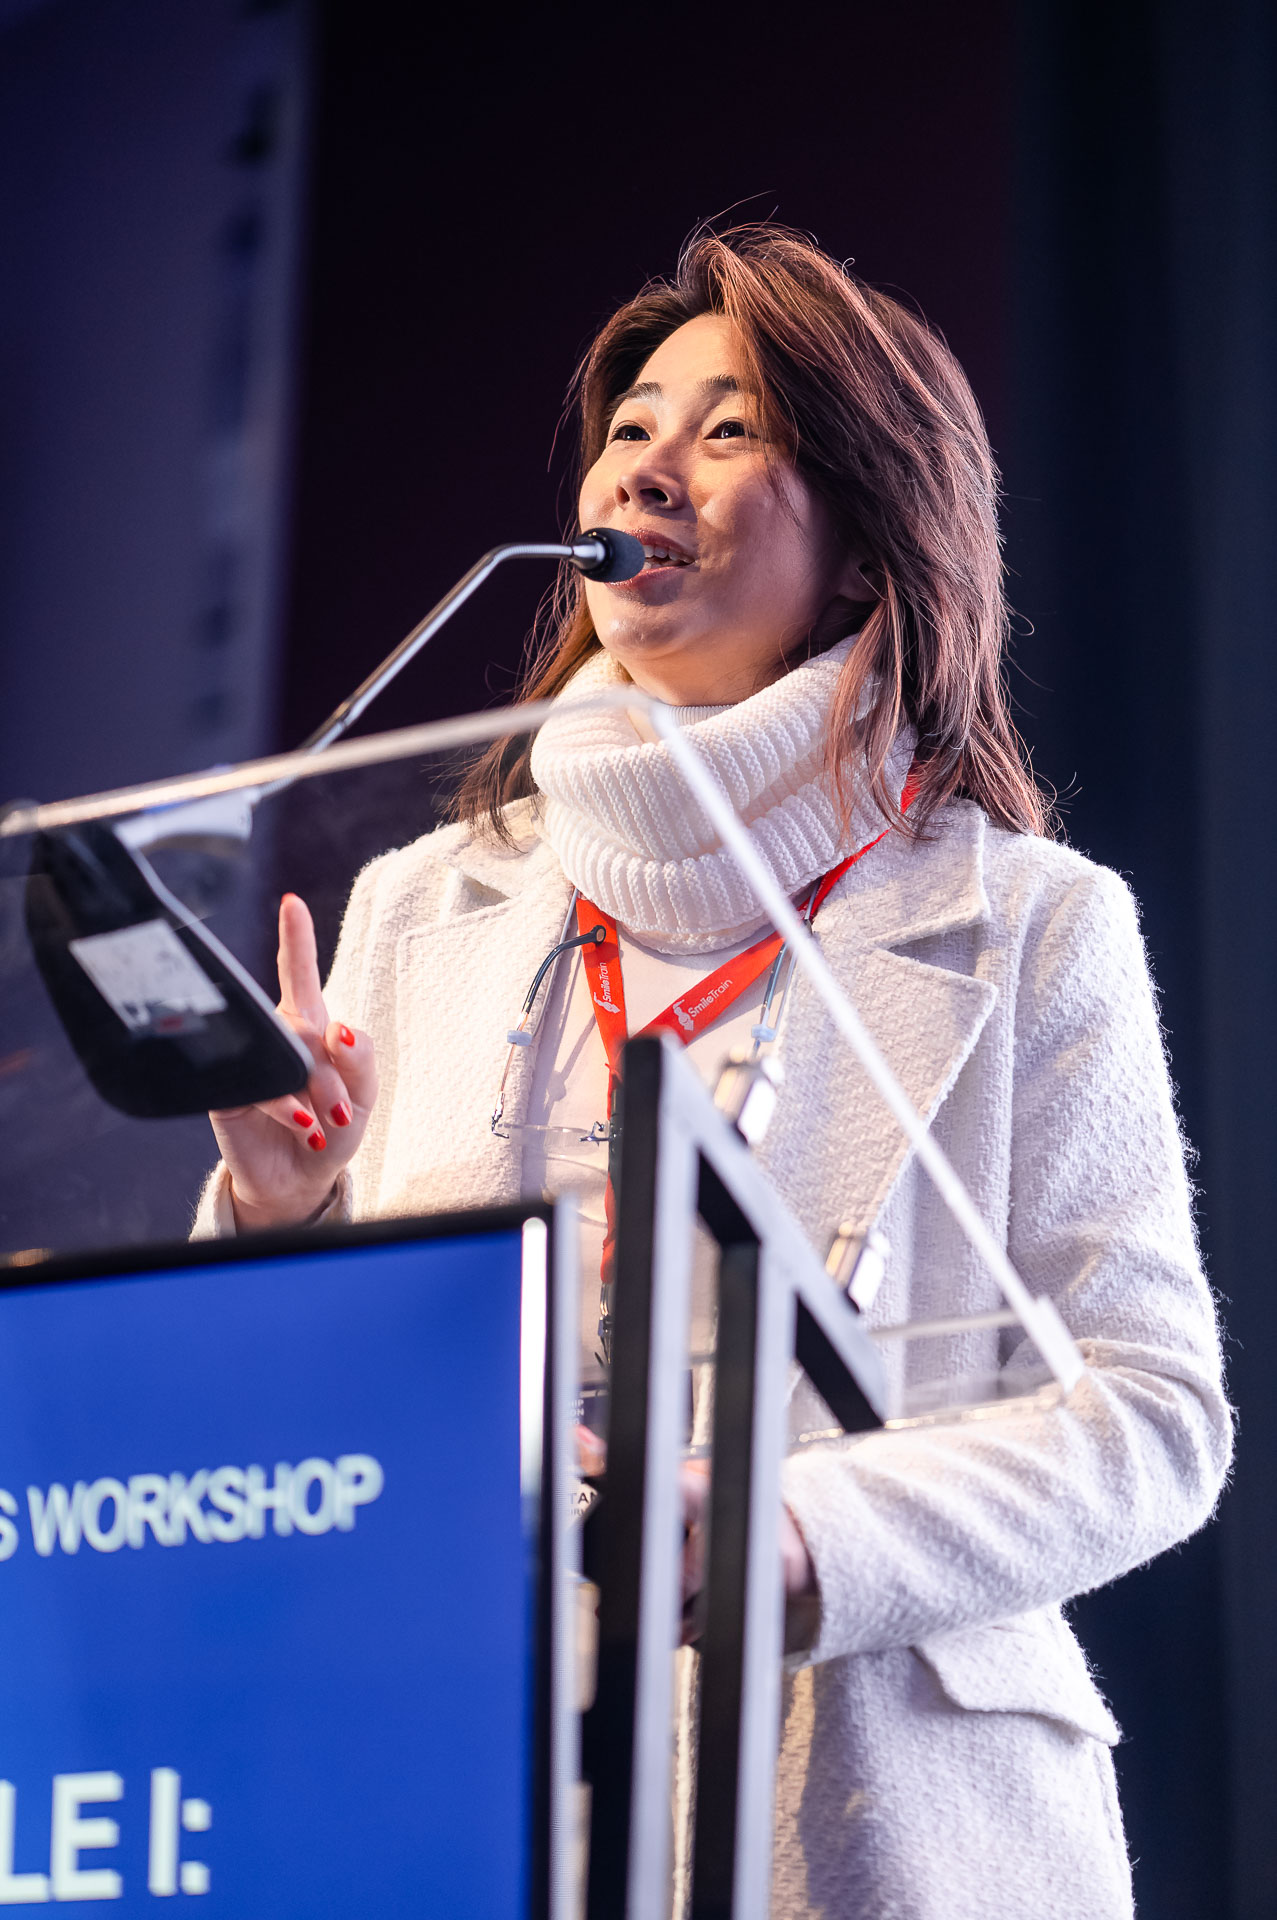 Dr. Daniela Tanikawa speaking at a podium